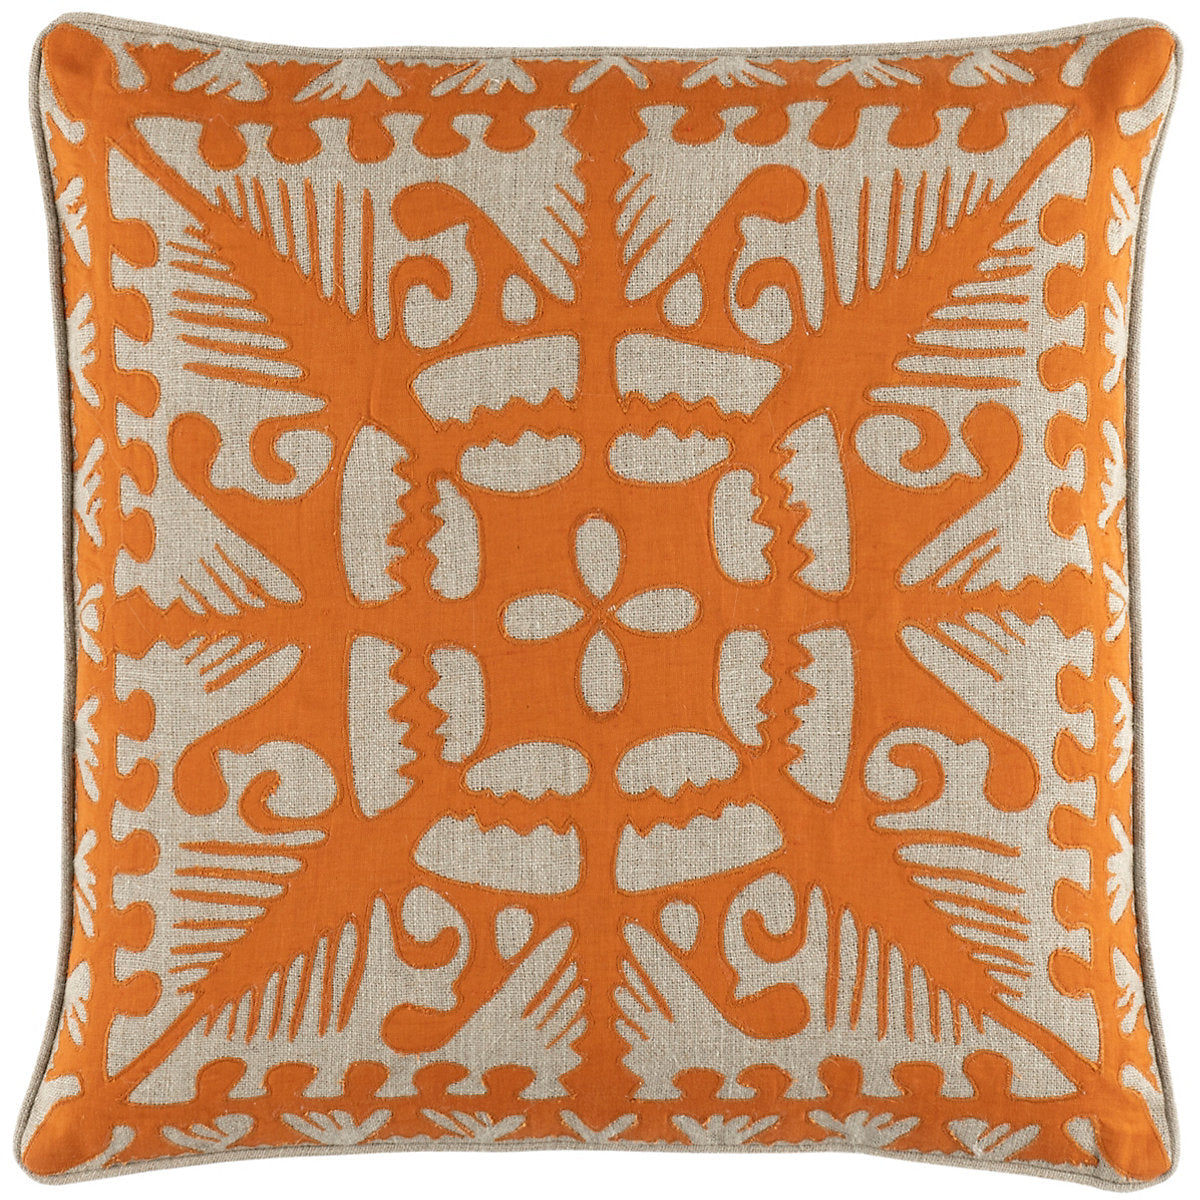 Pine Cone Hill Knight Wood Linen Decorative Pillow